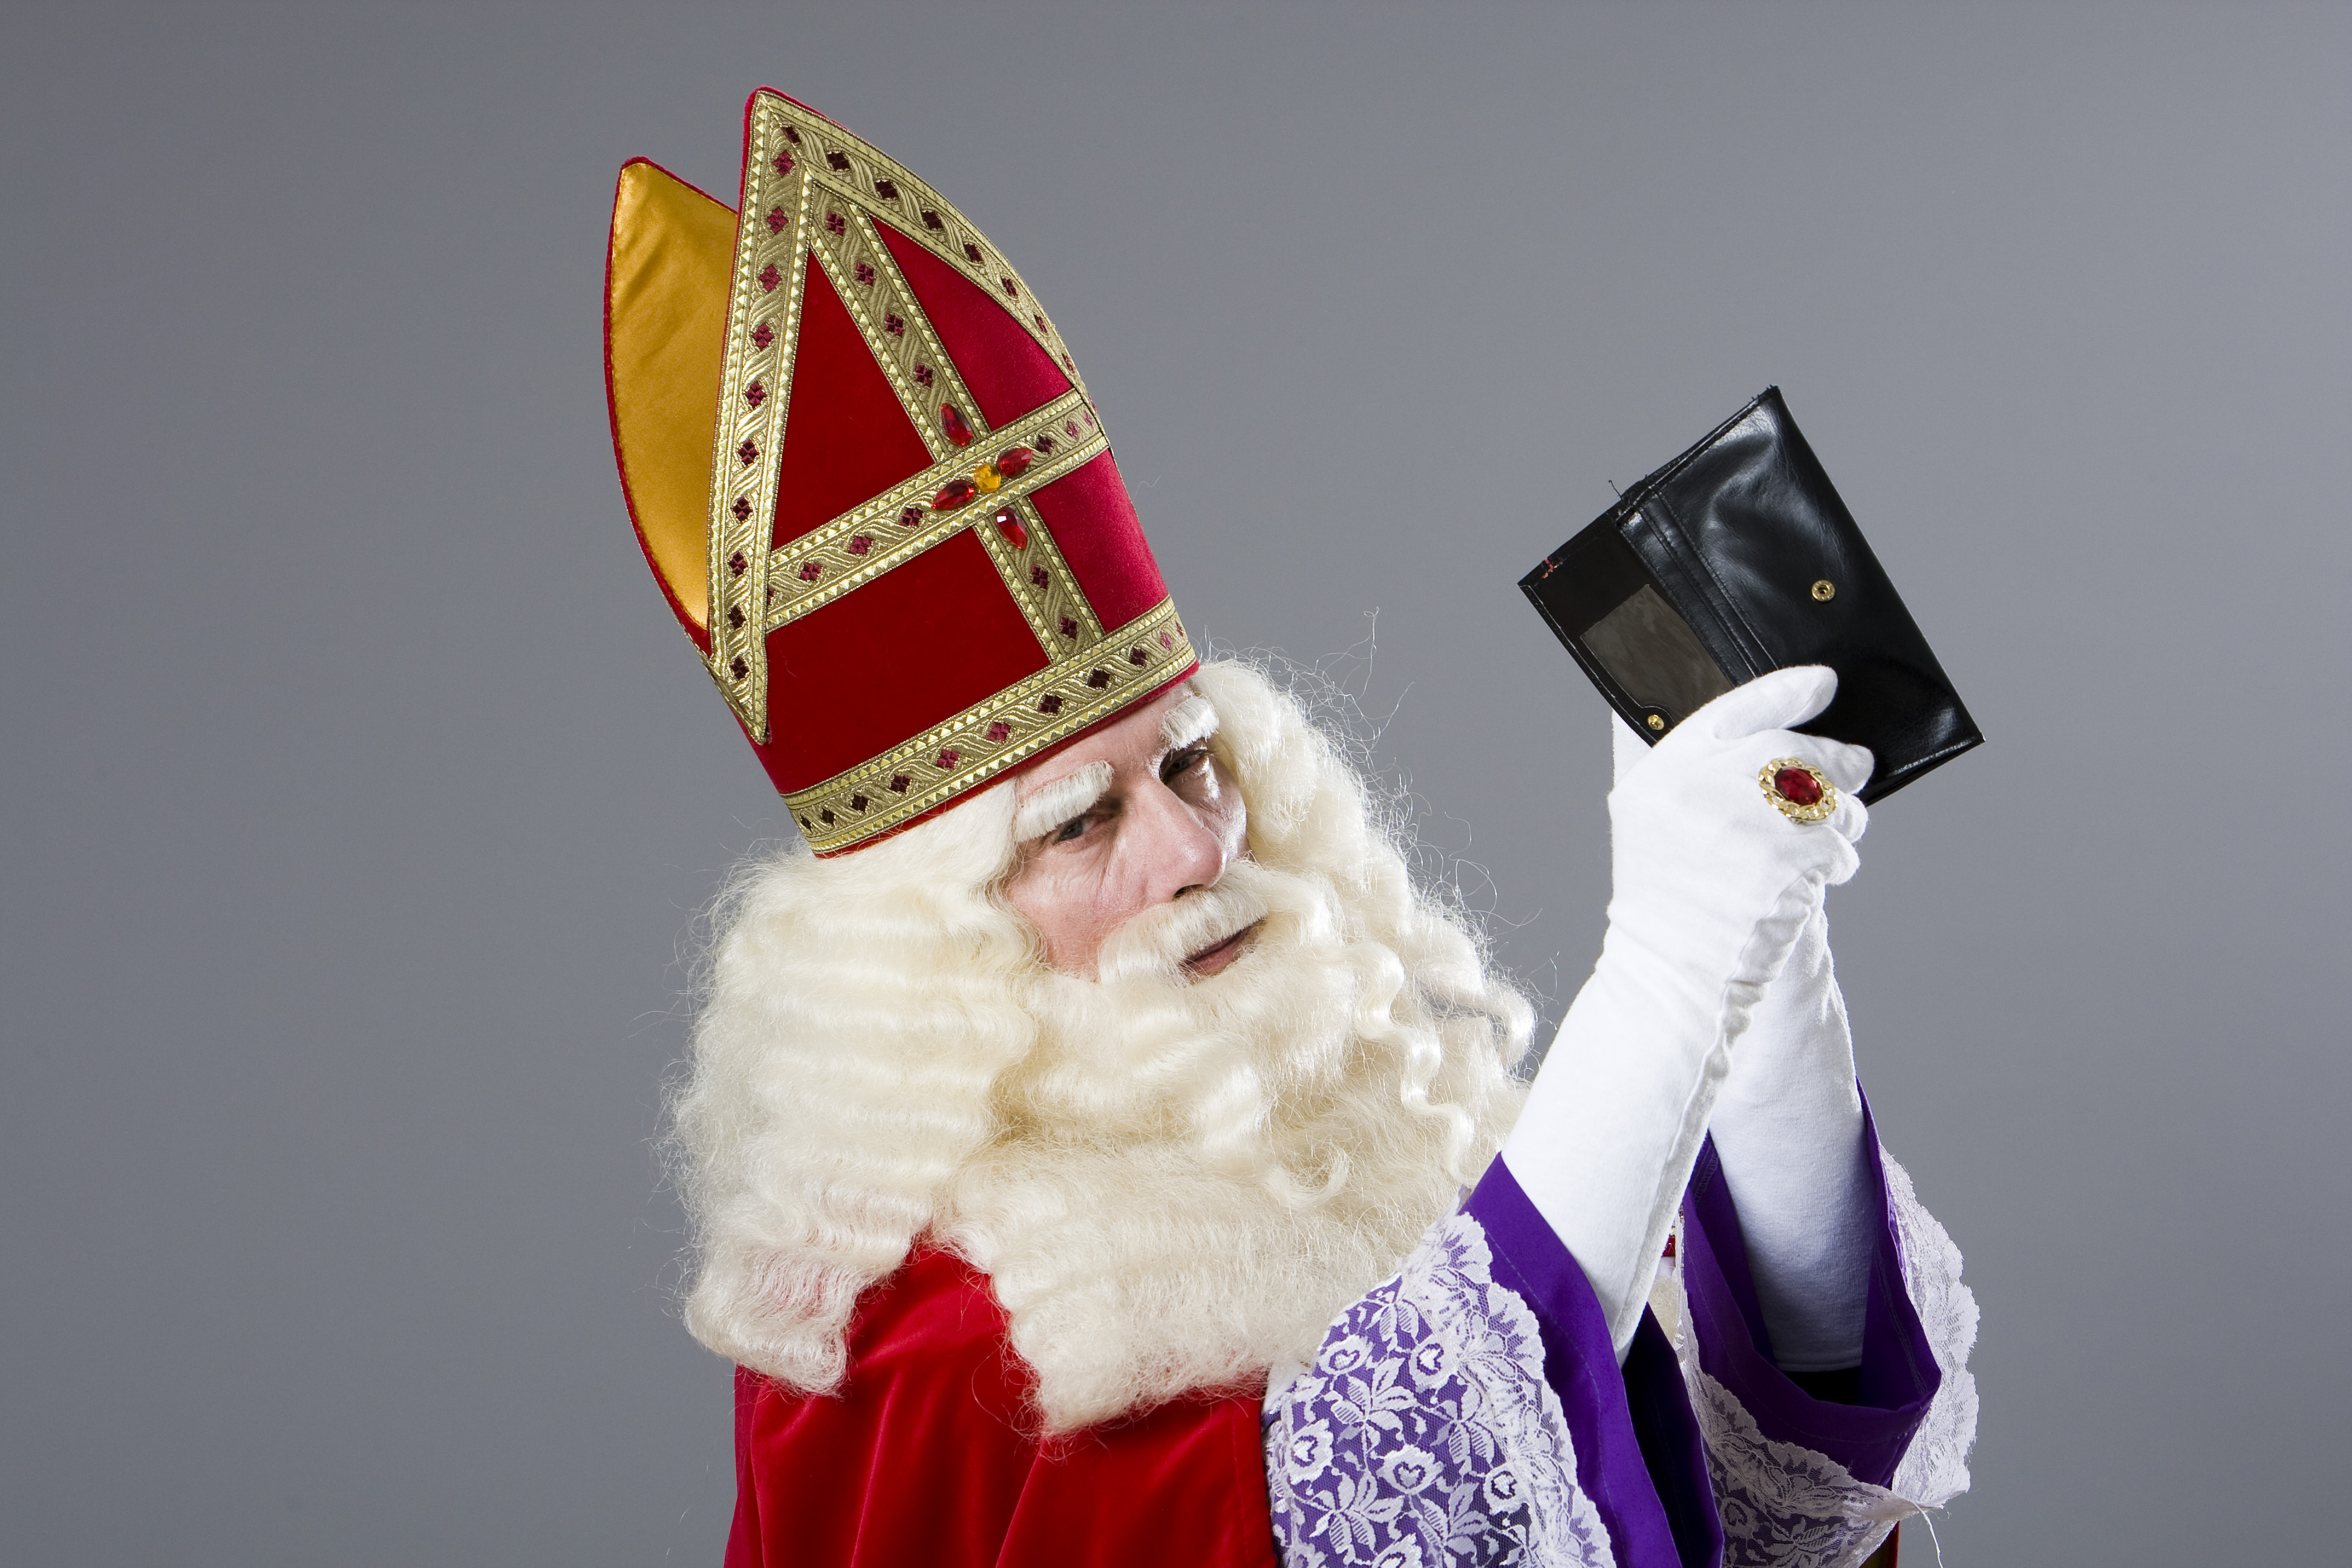 Zo vier je goedkoop Sinterklaas budget